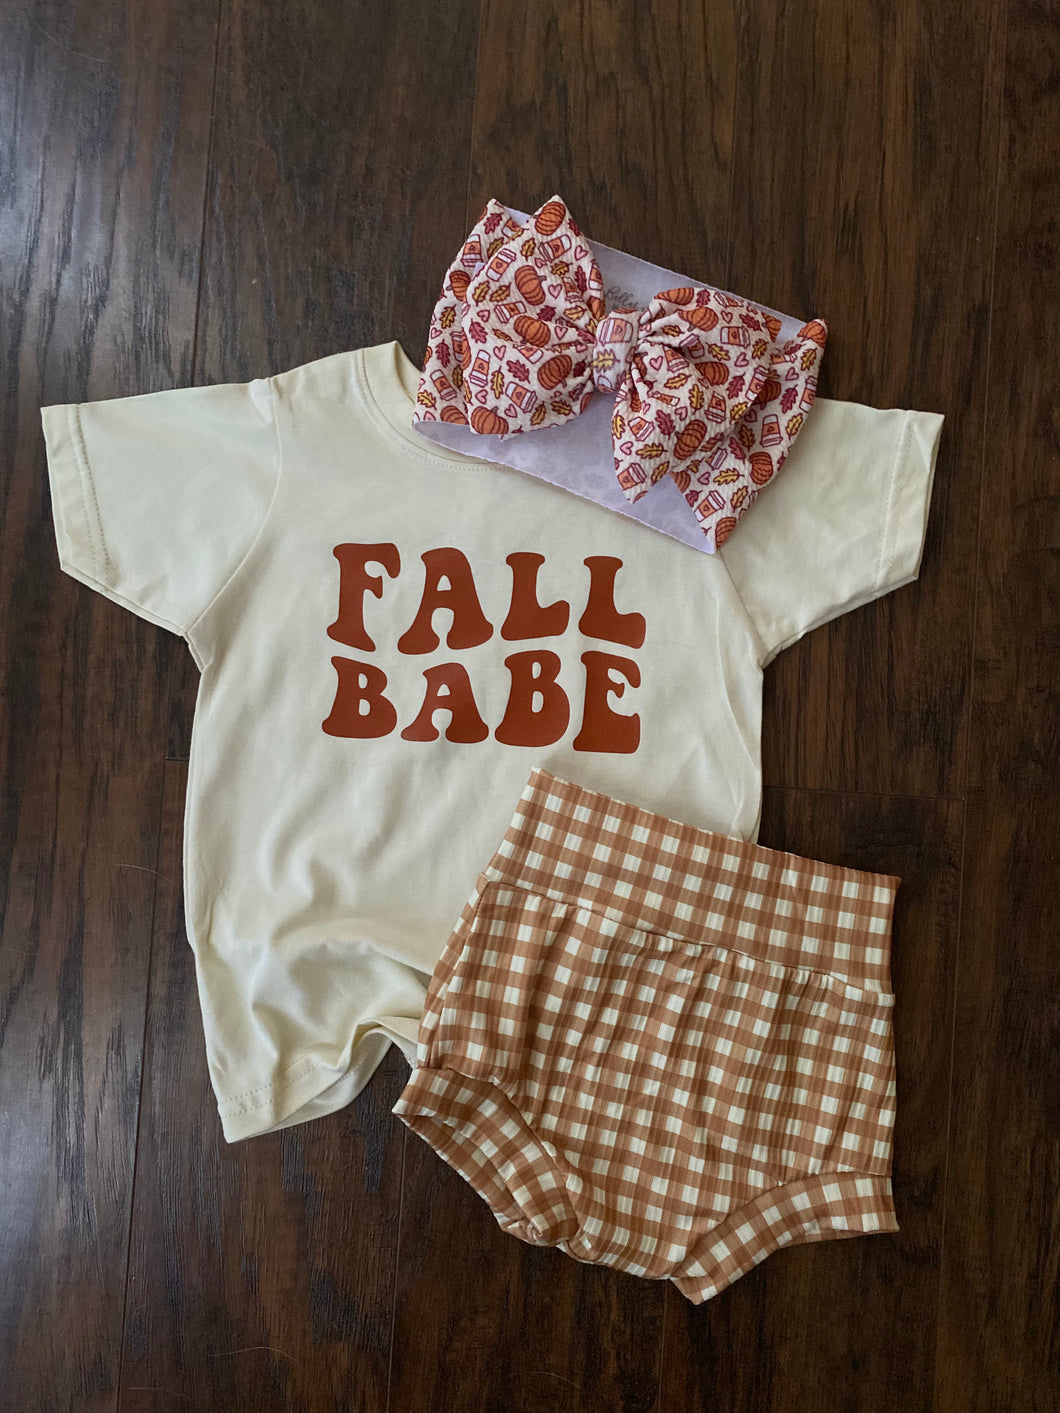 Fall Babe shirt